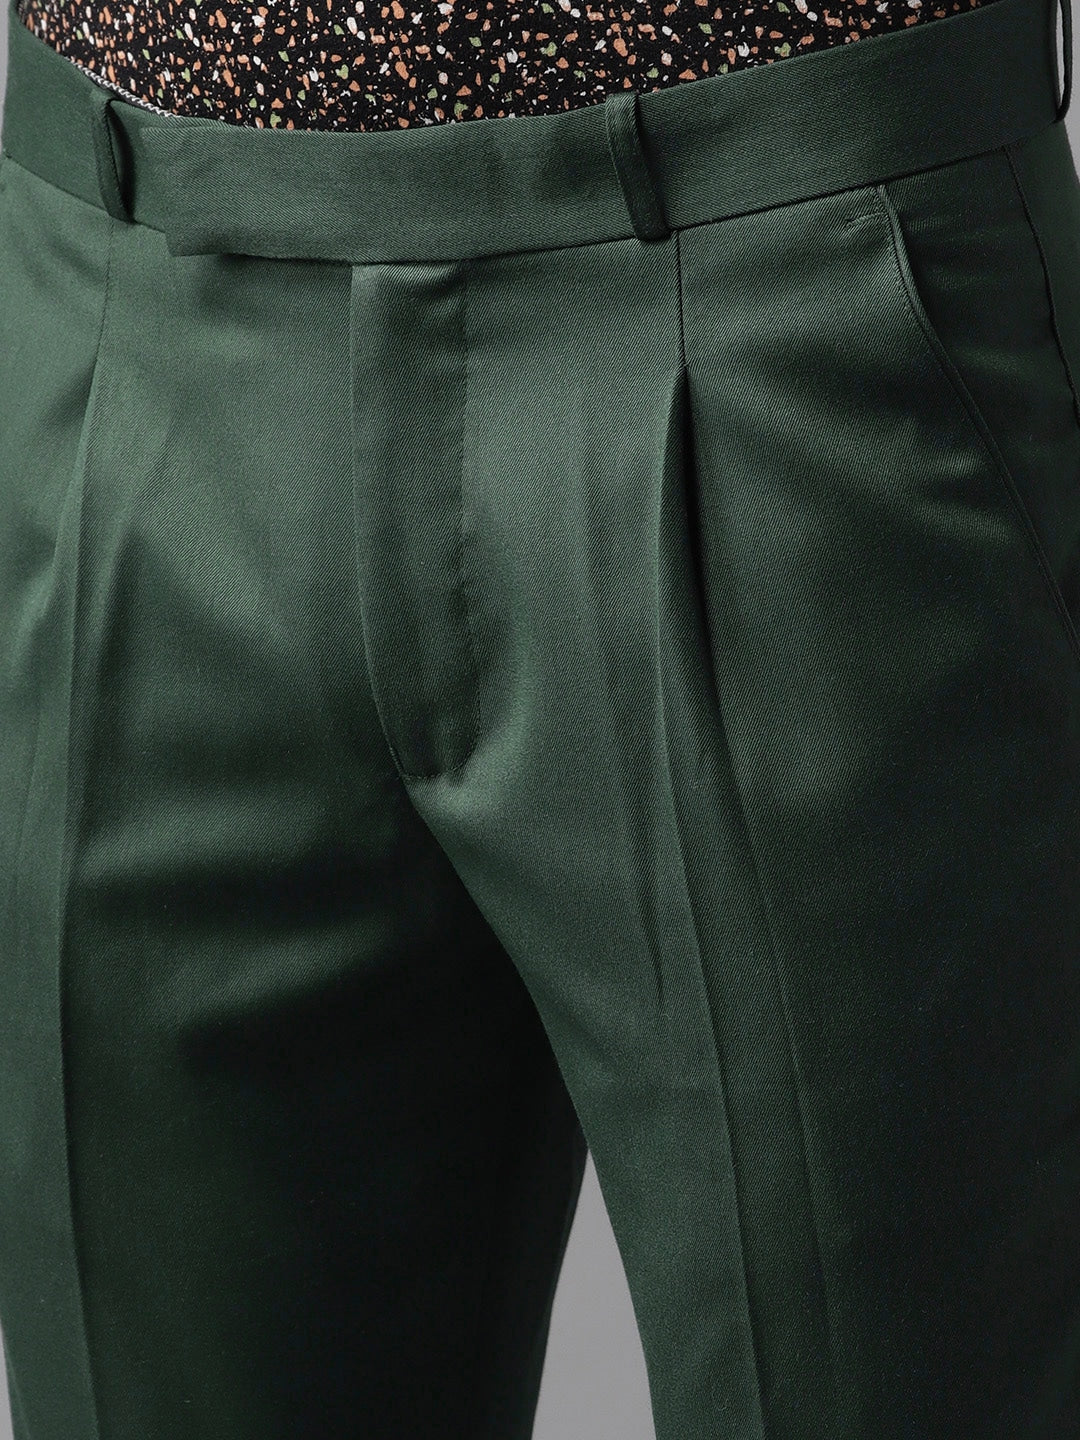 Atmosphere Ladies Khaki Green Slim Leg Tapered Casual Trousers Pants UK  Size 8 | eBay